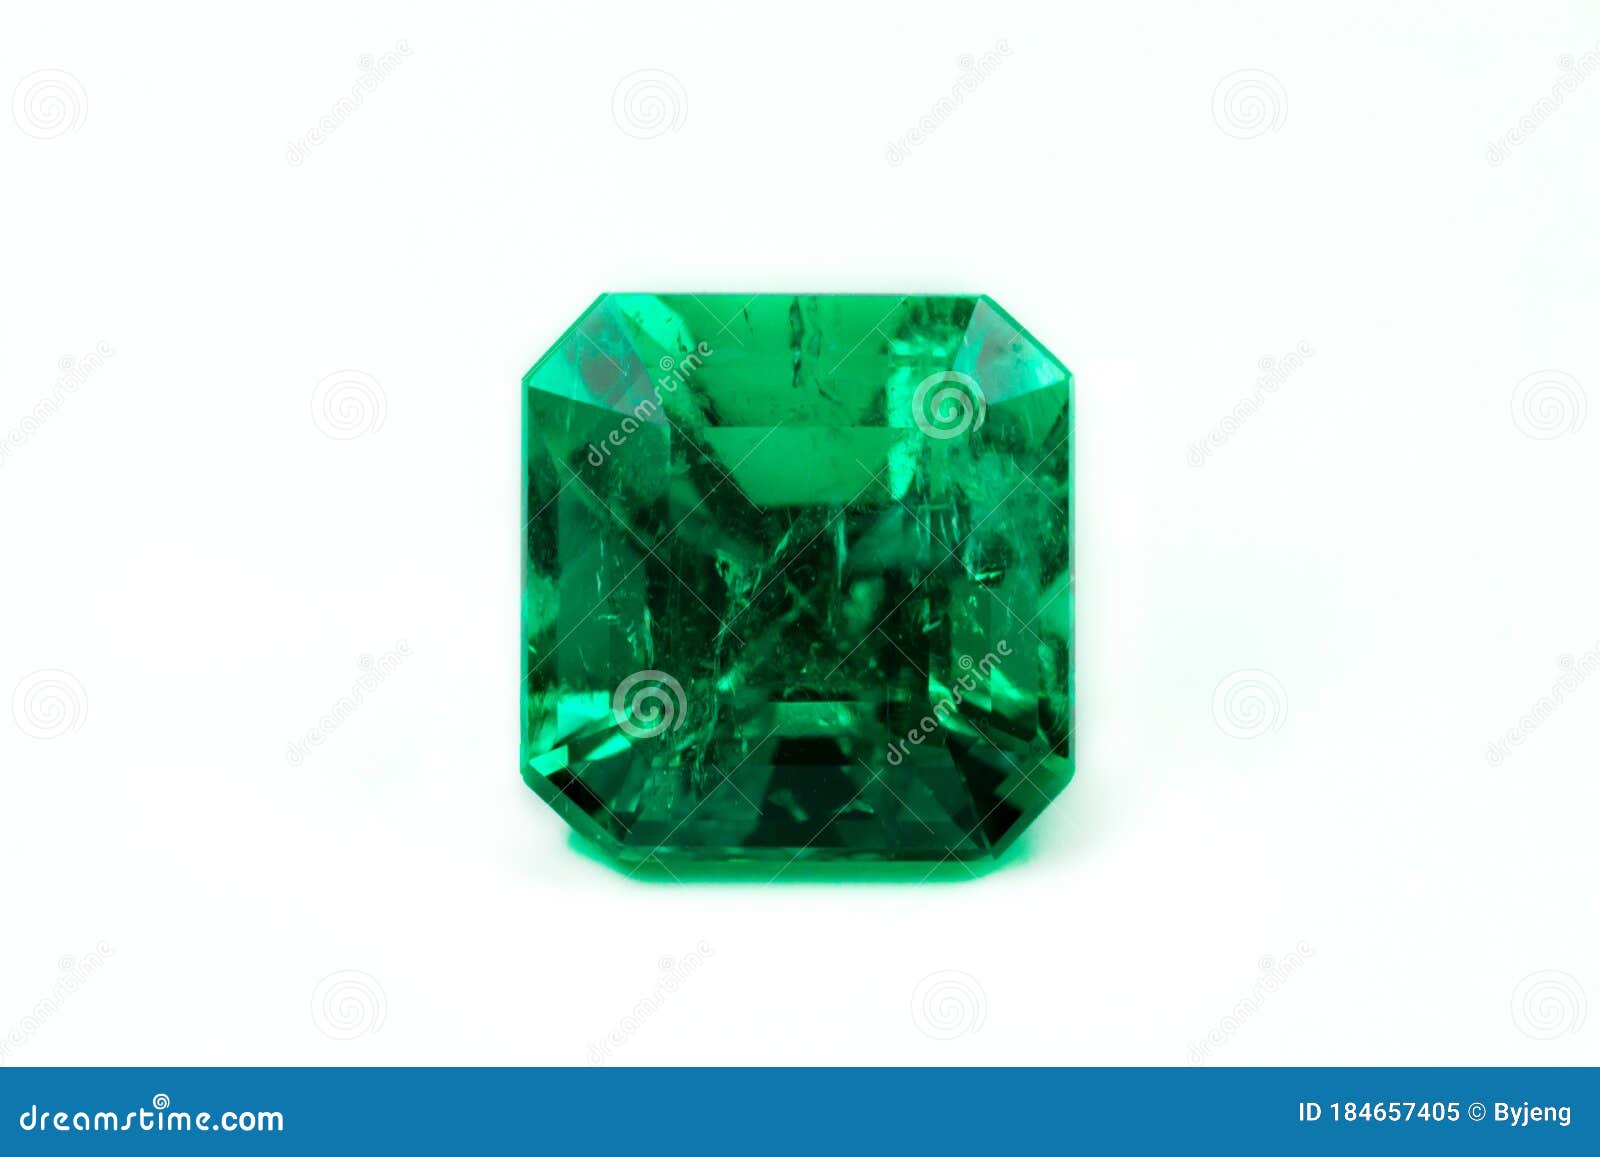 natural green emerald sapphire precious gemstone  on white background